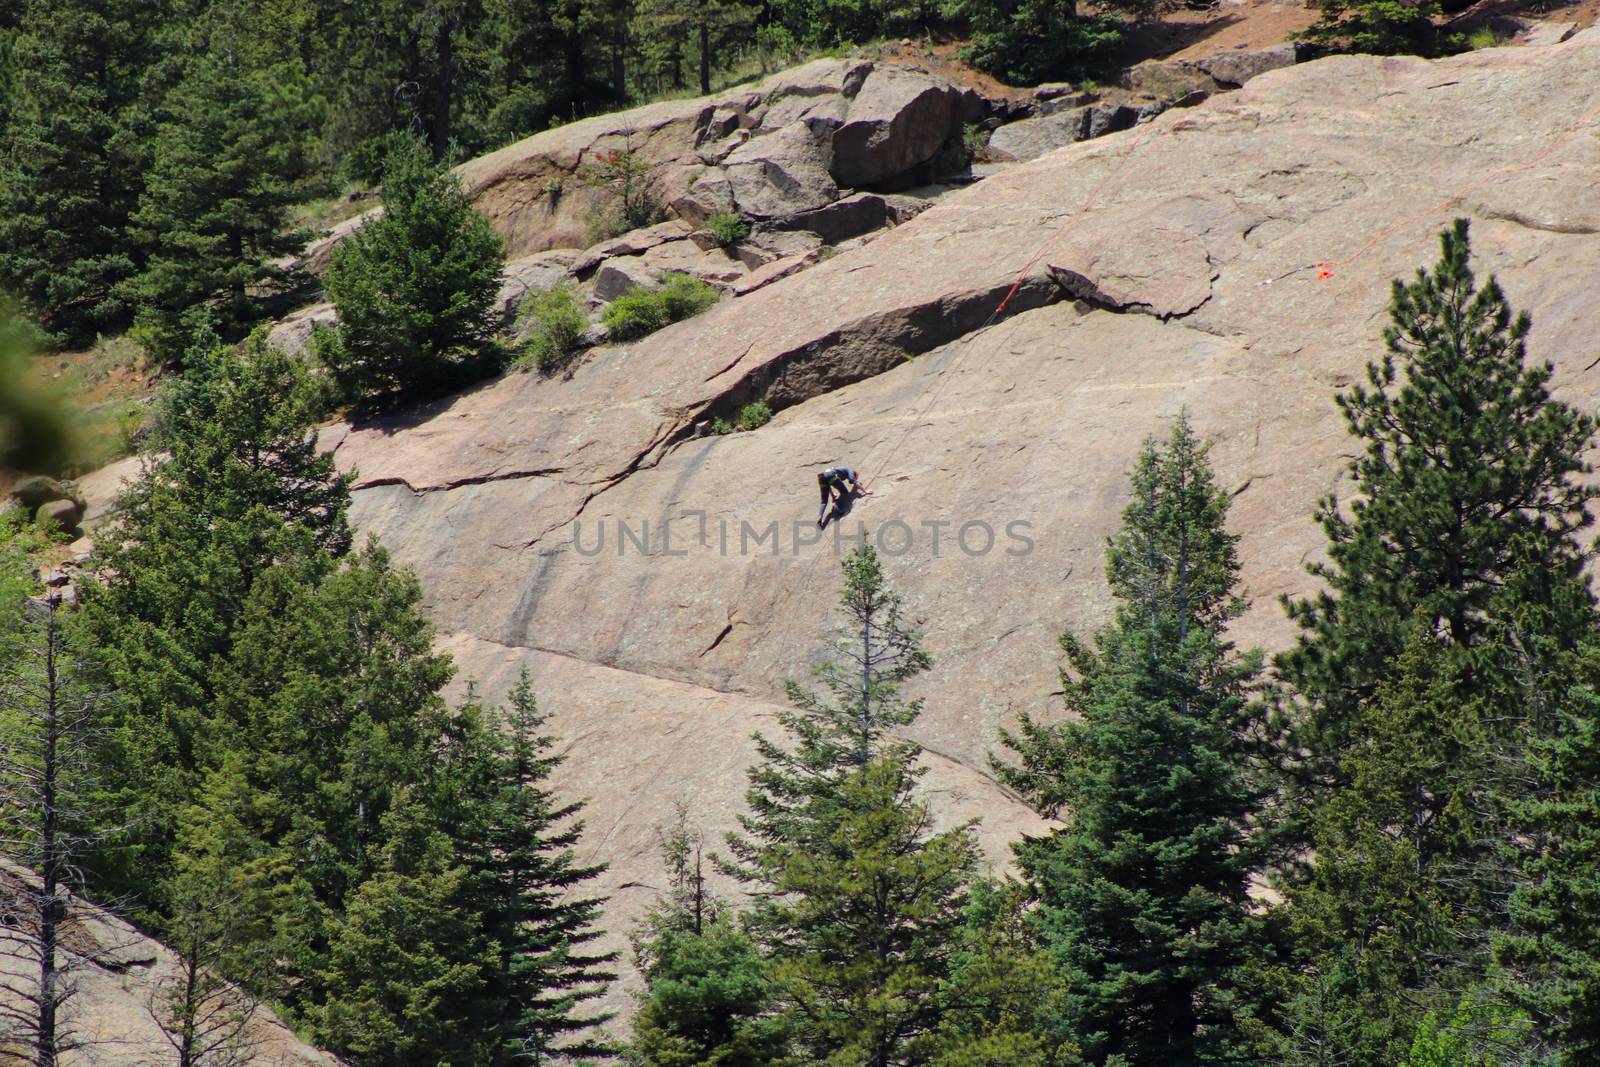 Helen hunt's falls Colorado Man rock climbing by gena_wells